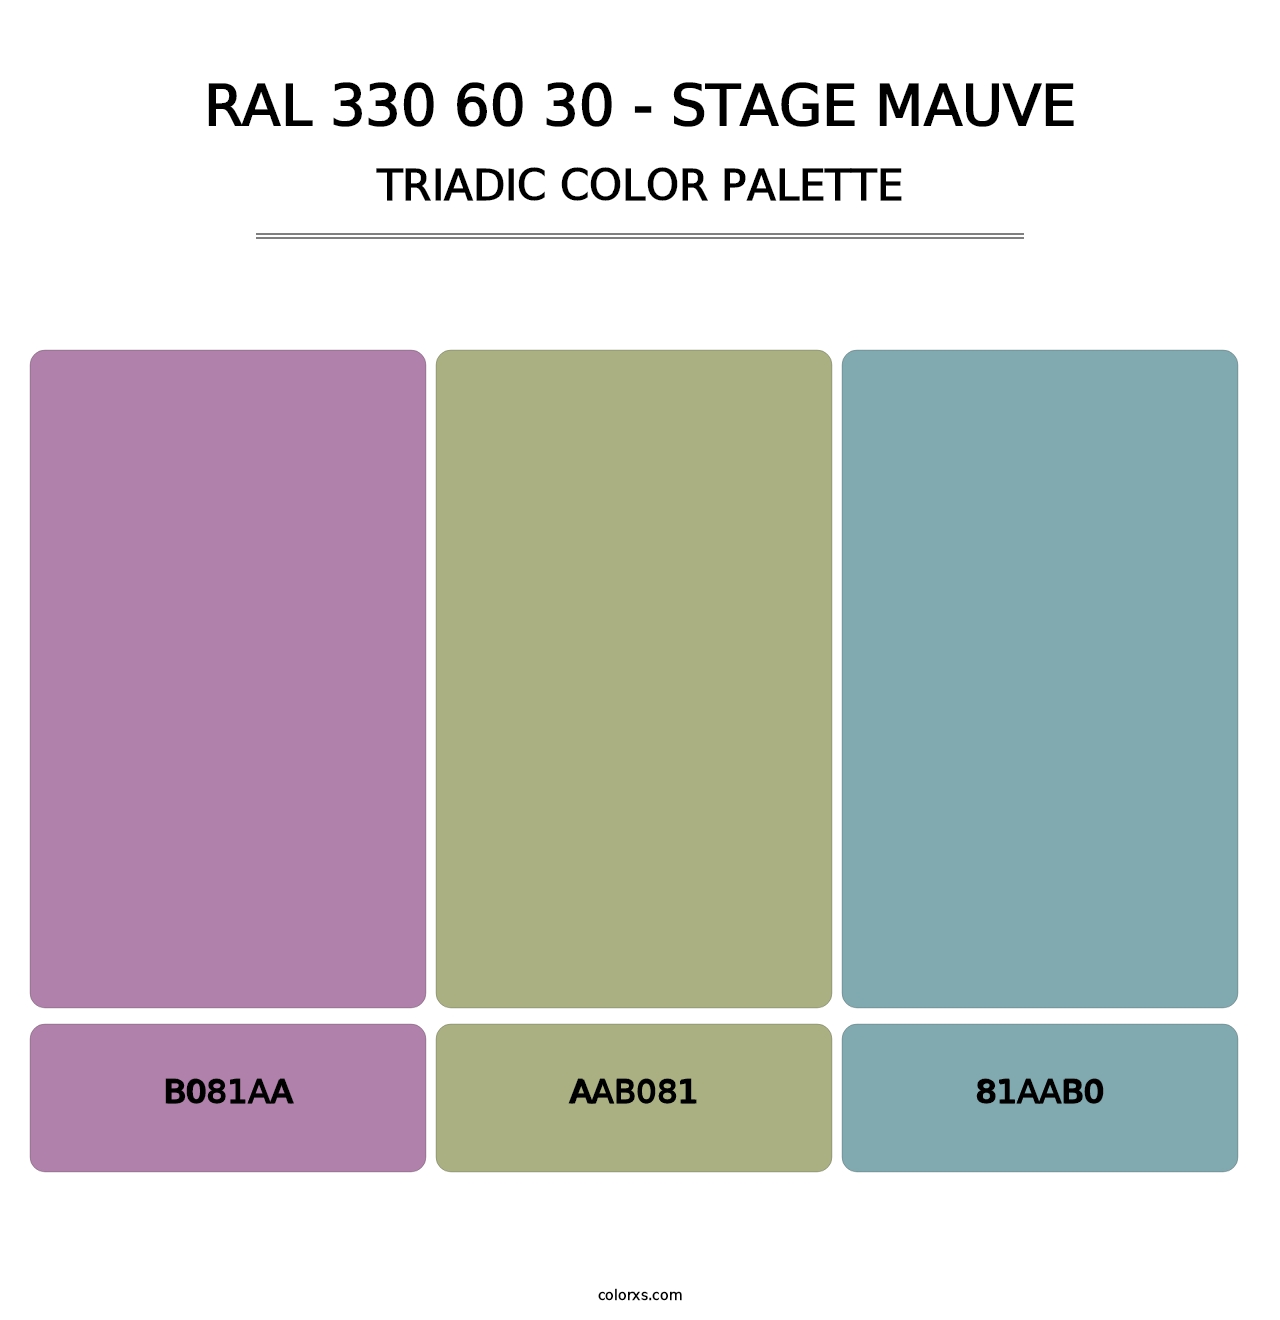 RAL 330 60 30 - Stage Mauve - Triadic Color Palette